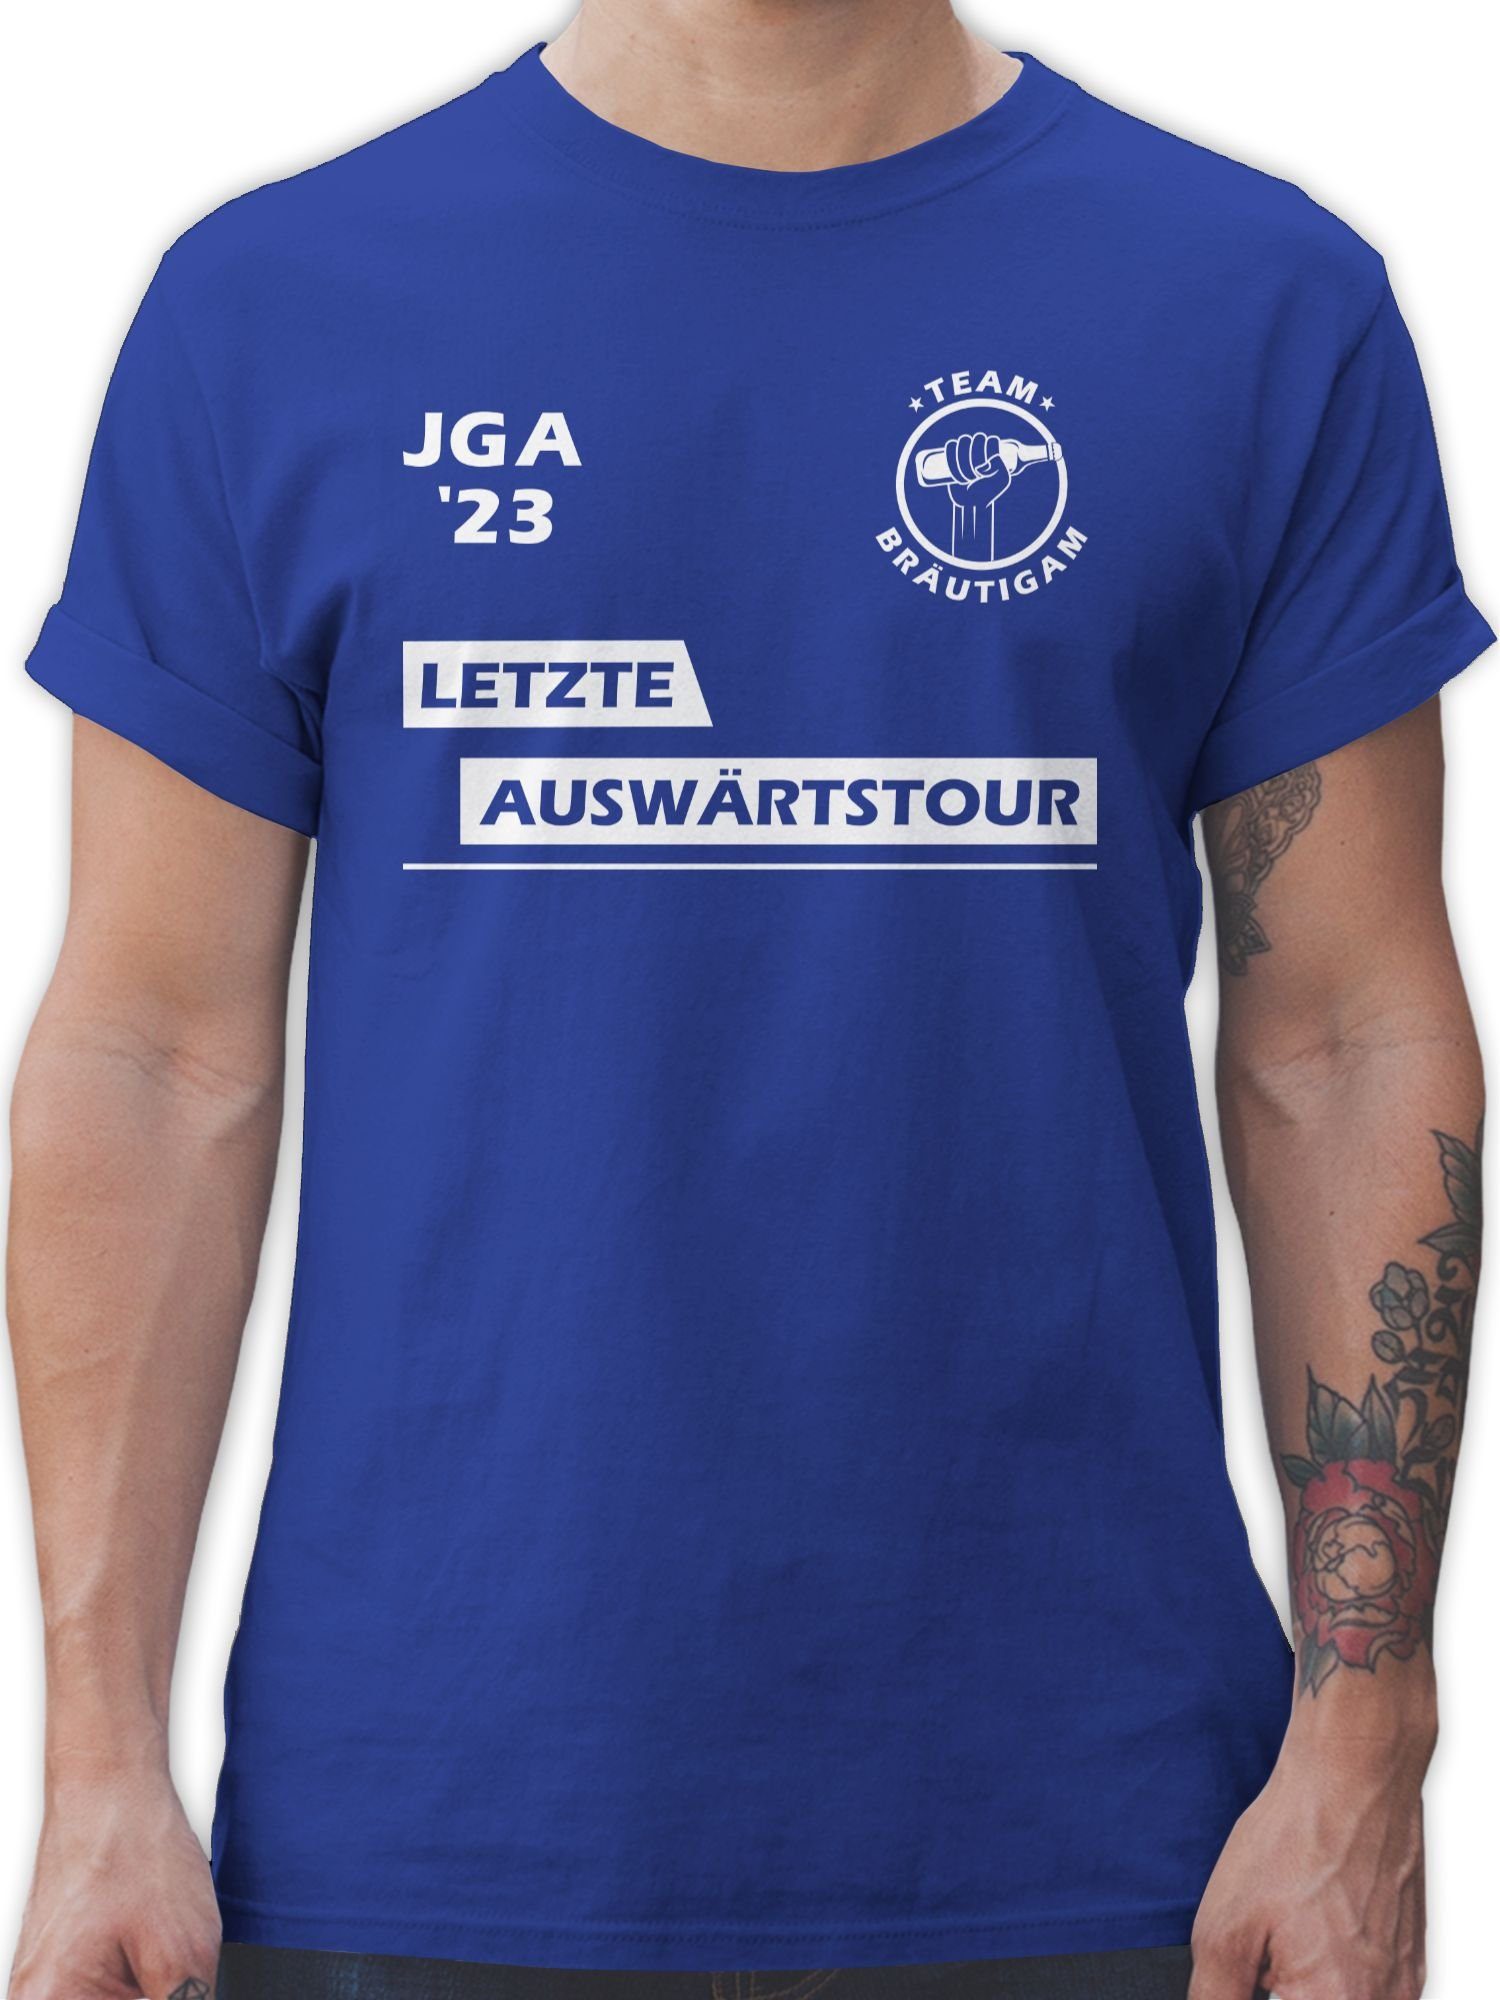 Männer Royalblau Shirtracer 3 JGA T-Shirt Team Bräutigam Auswärtstour Letzte